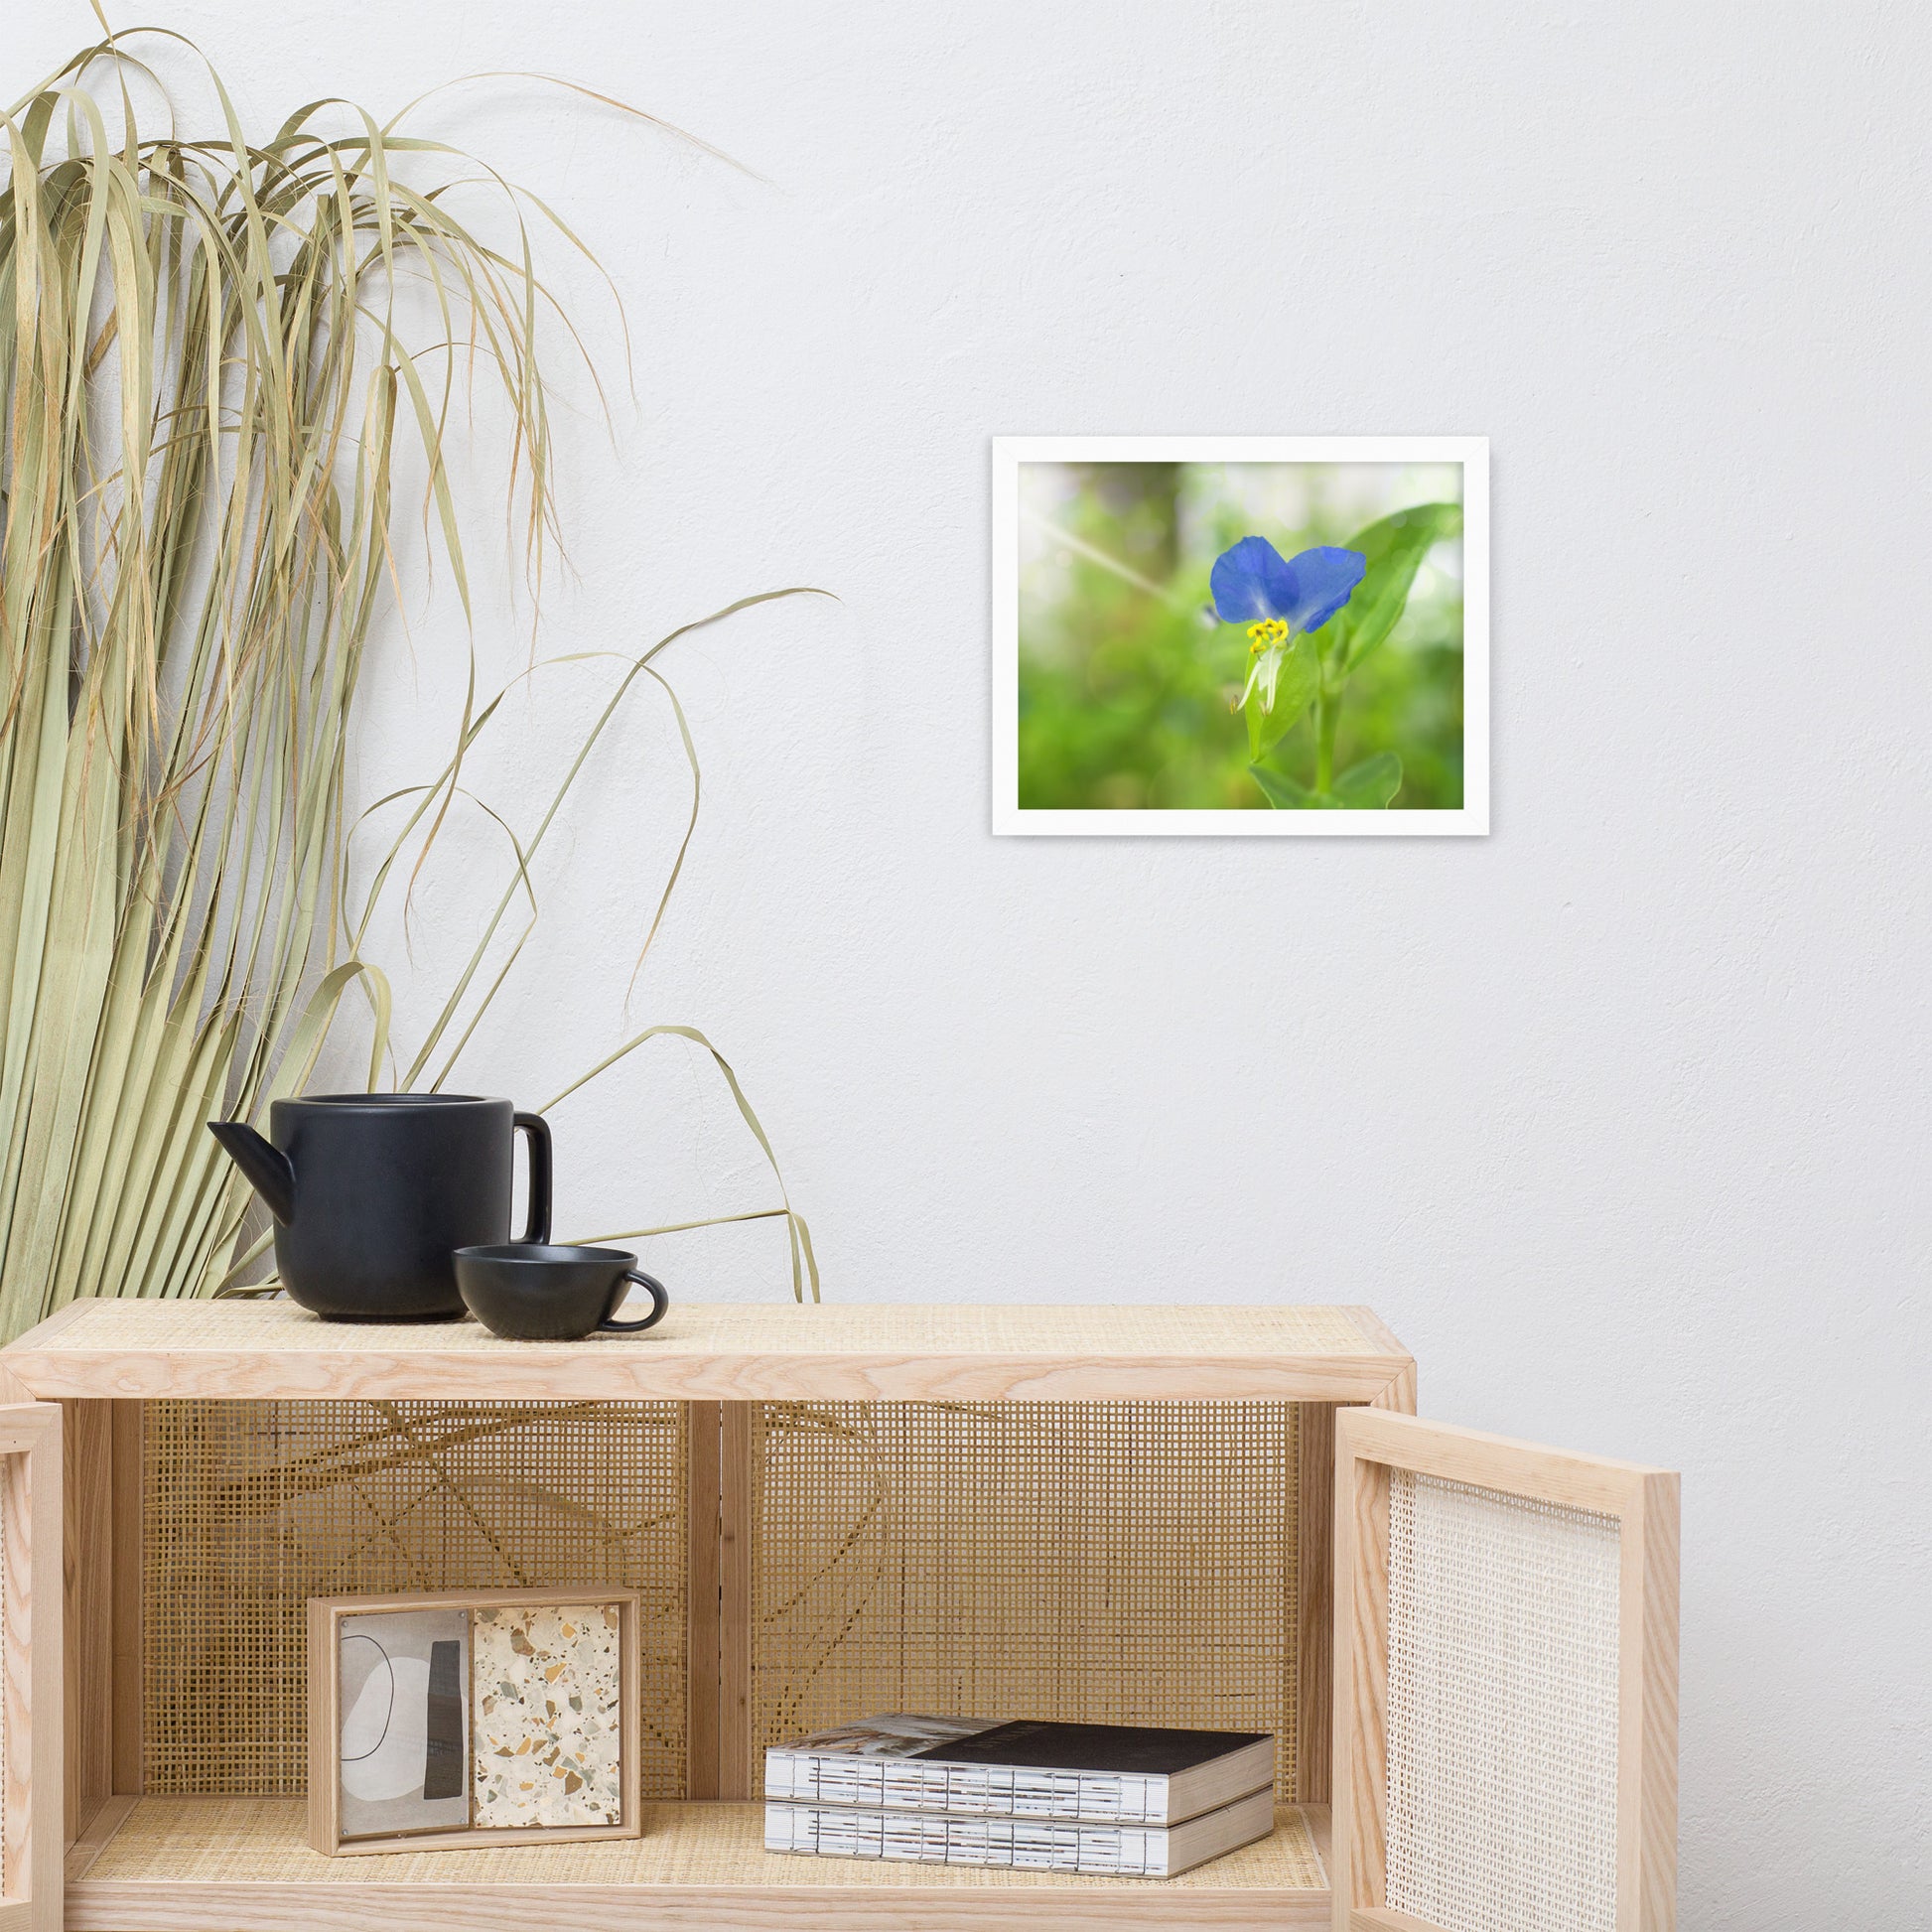 Blue Kitchen Wall Decor: Asiatic Dayflower - Floral / Botanical / Nature Photo Framed Wall Art Print - Artwork - Modern Wall Decor